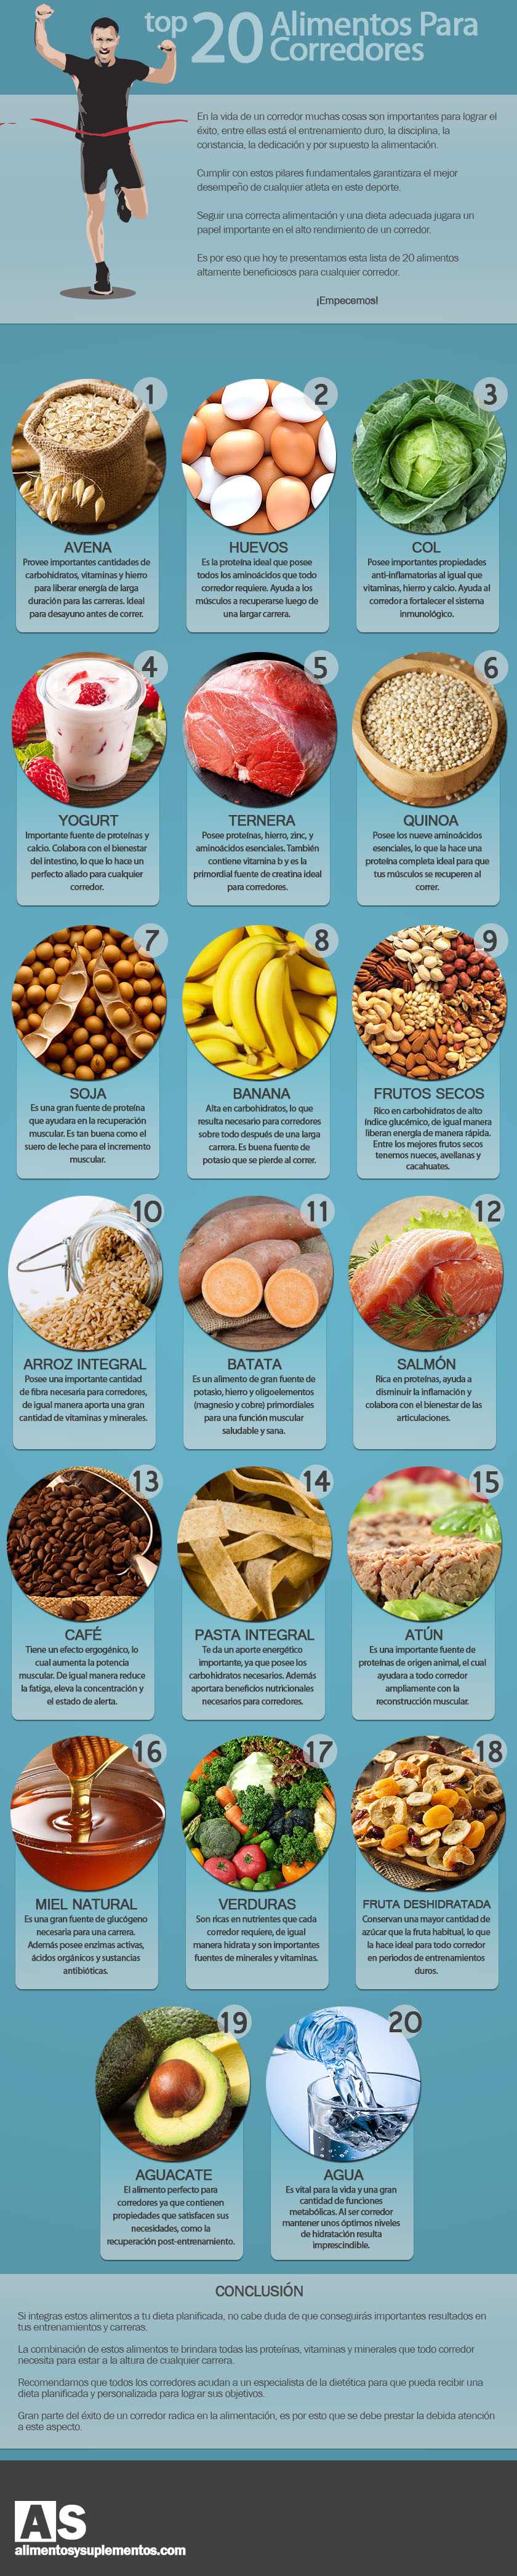 20 alimentos importantes para corredores infografia